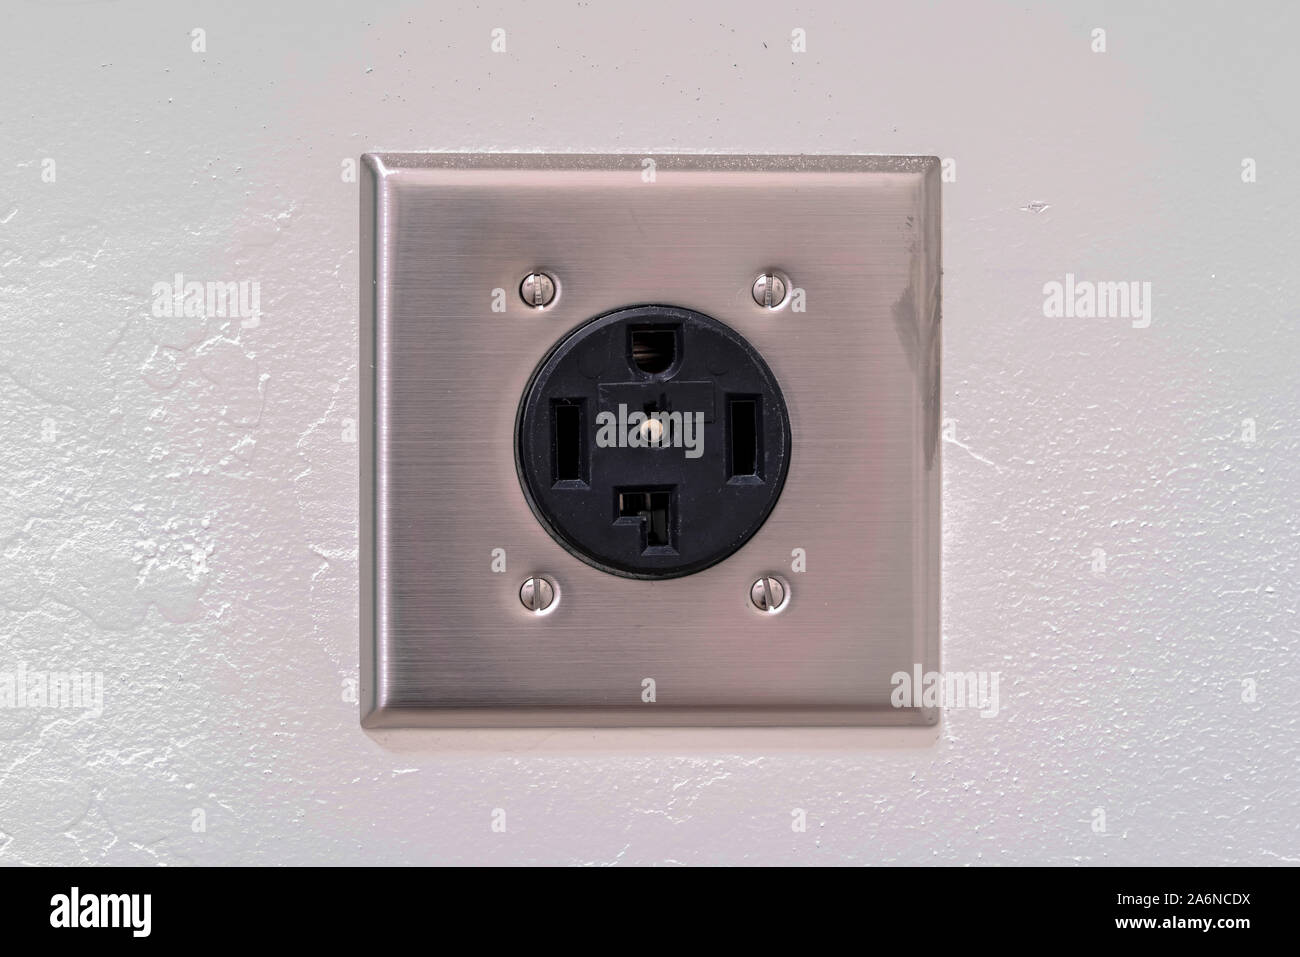 Close up detail of a washing machine plug socket Stock Photo